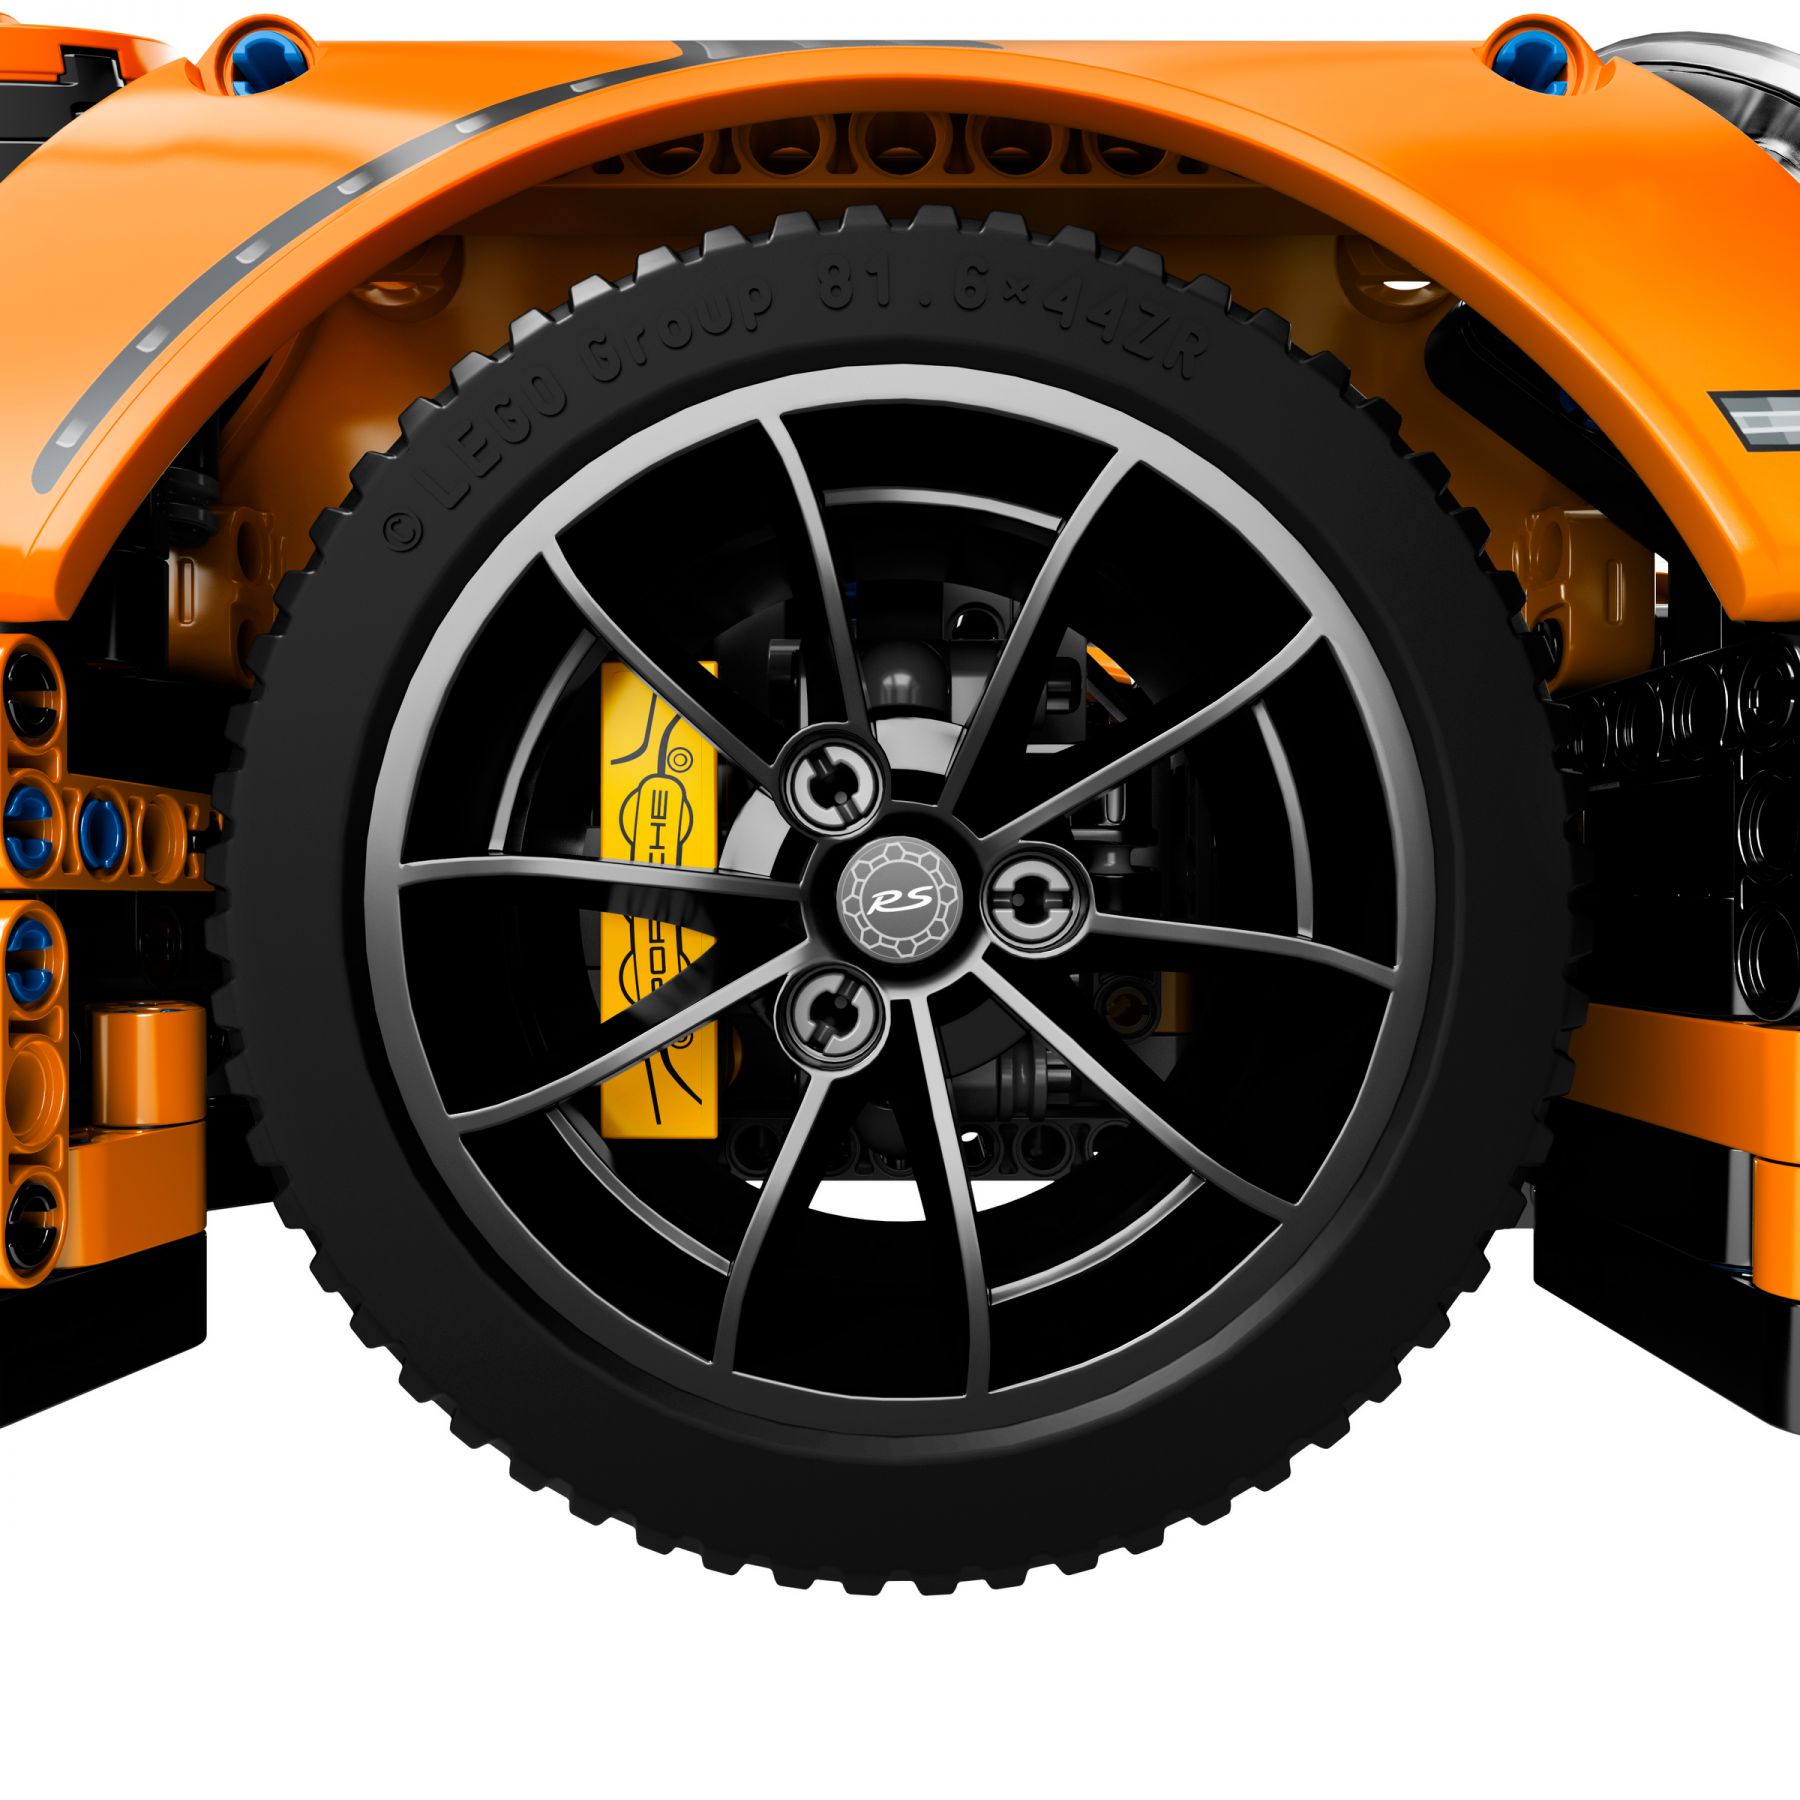 LEGO Technic 42056 Porsche 911 GT3 RS LEGO_42056_alt6.jpg